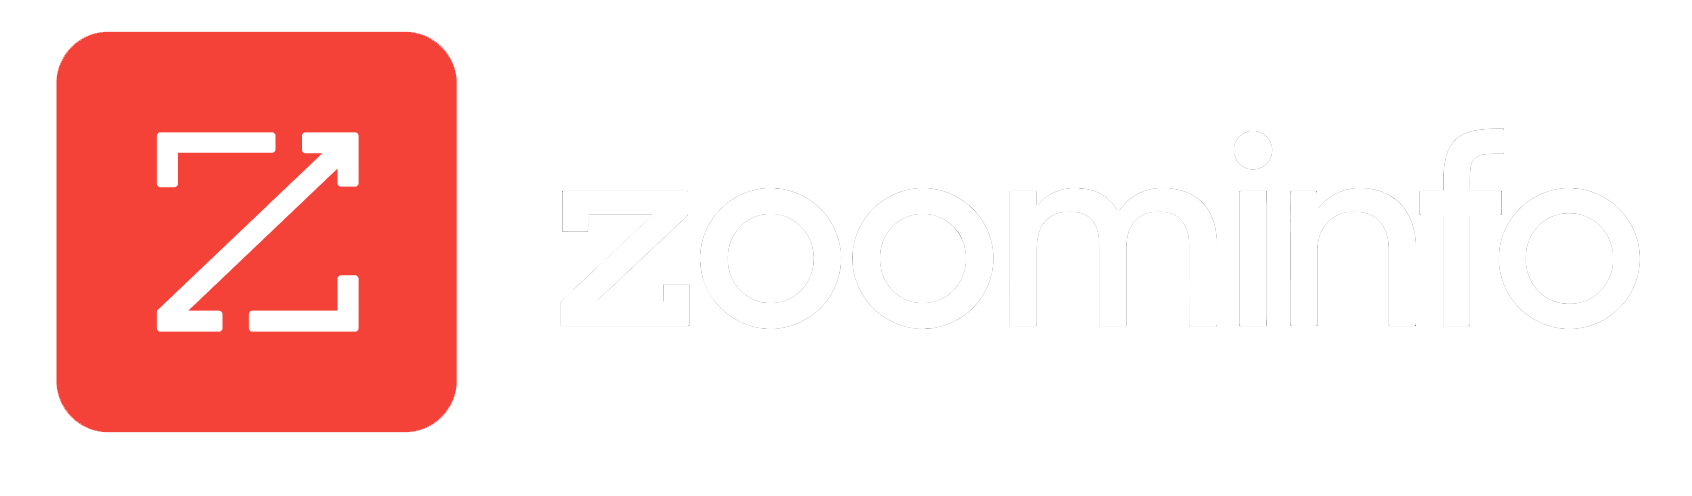 Zoominfo Logo